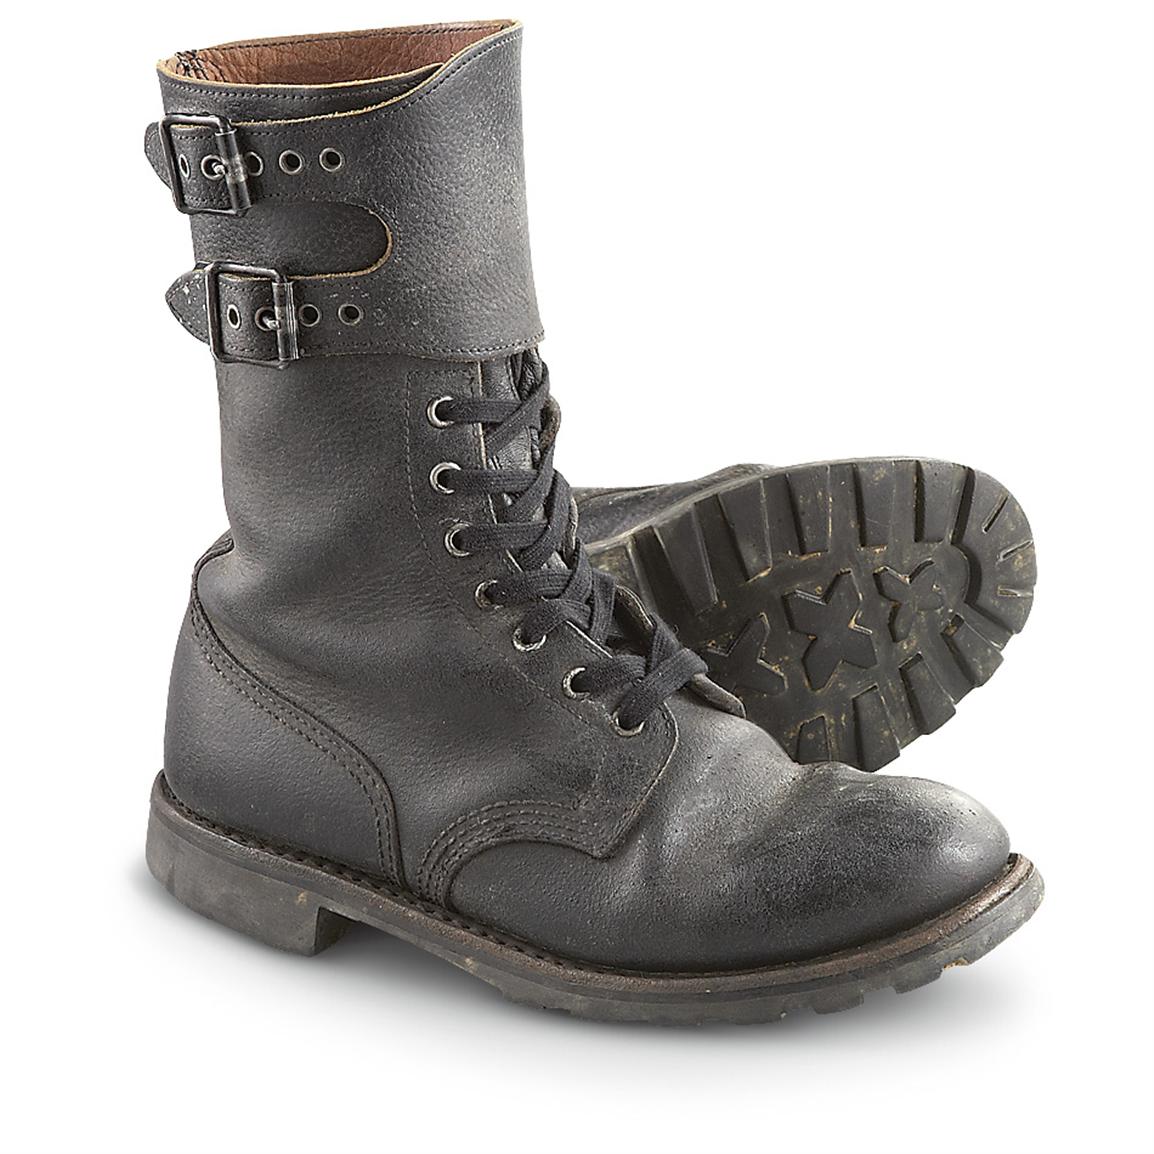 used black combat boots